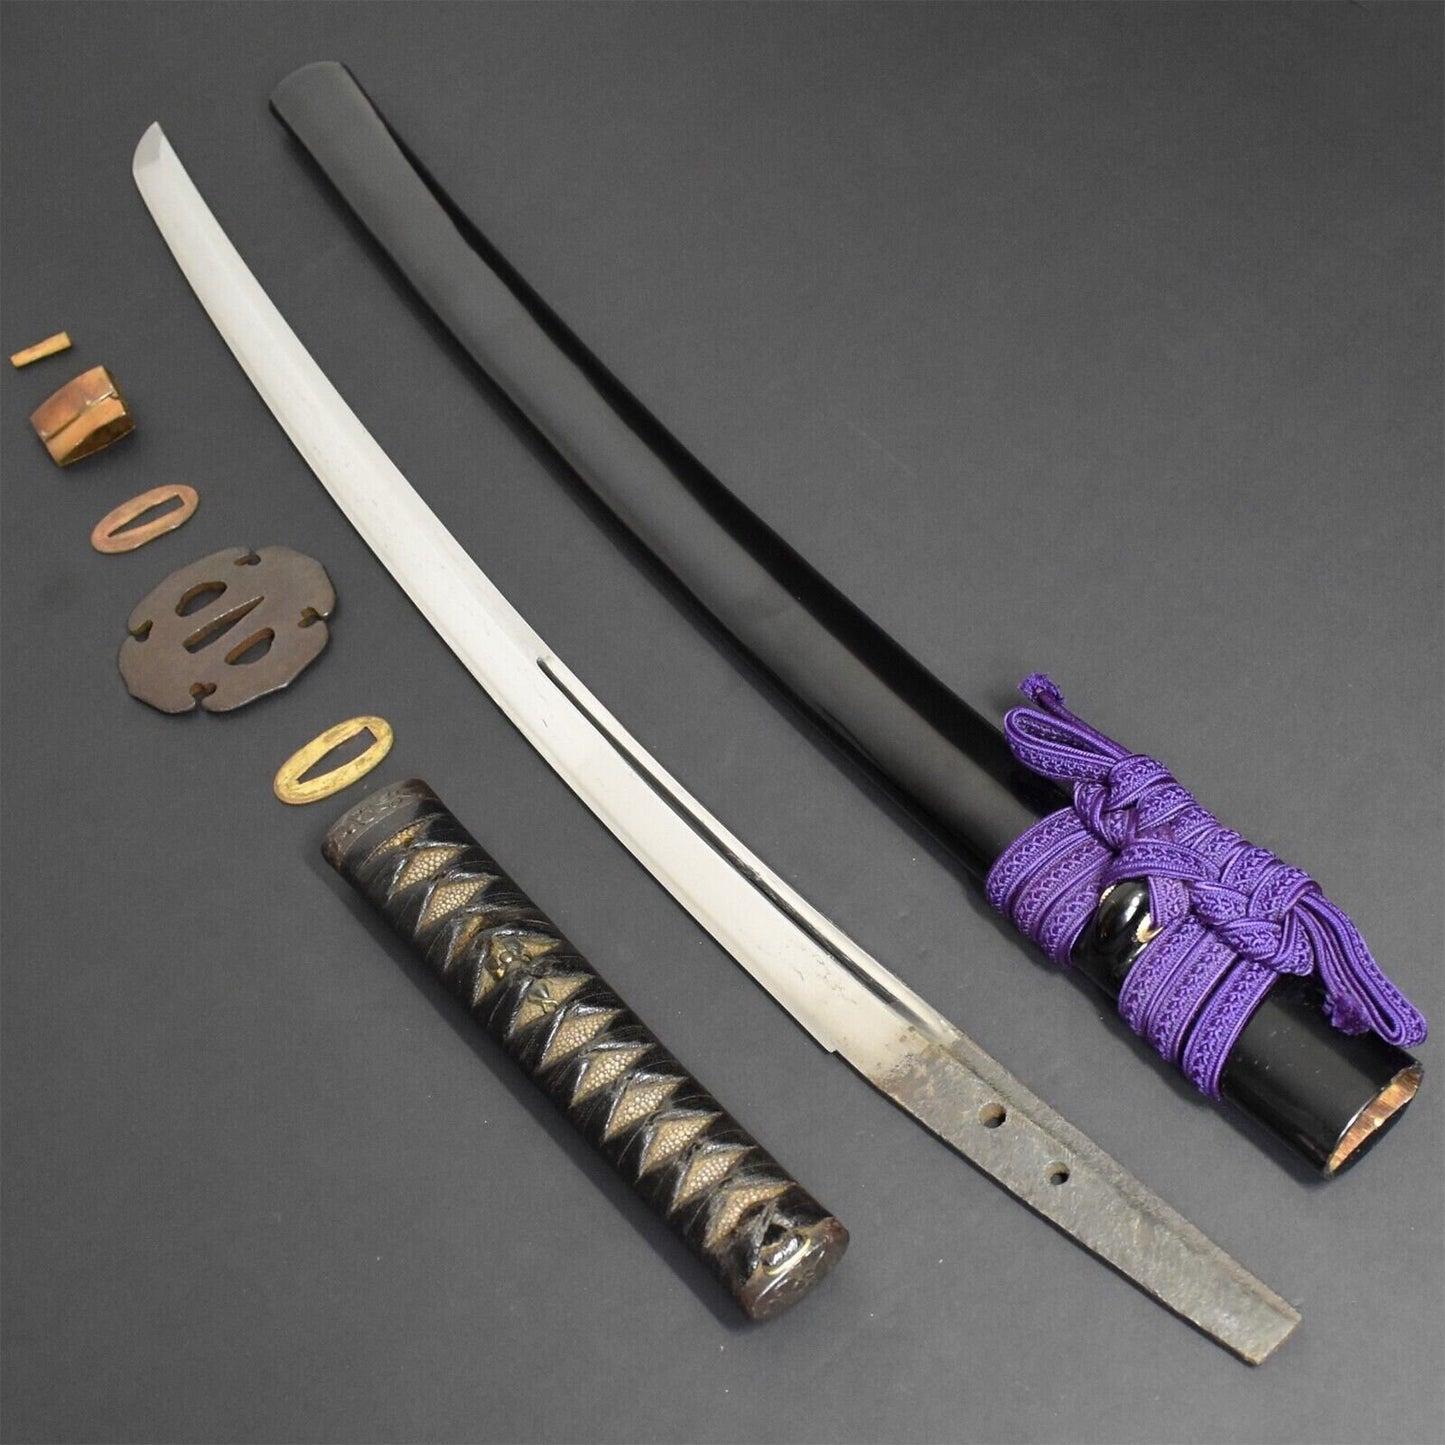 Antique Vintage Japanese Katana Wakizashi Sword Samurai Asian Weapon Authentic Original Blade Rarely Collectible Men's Gift Era.